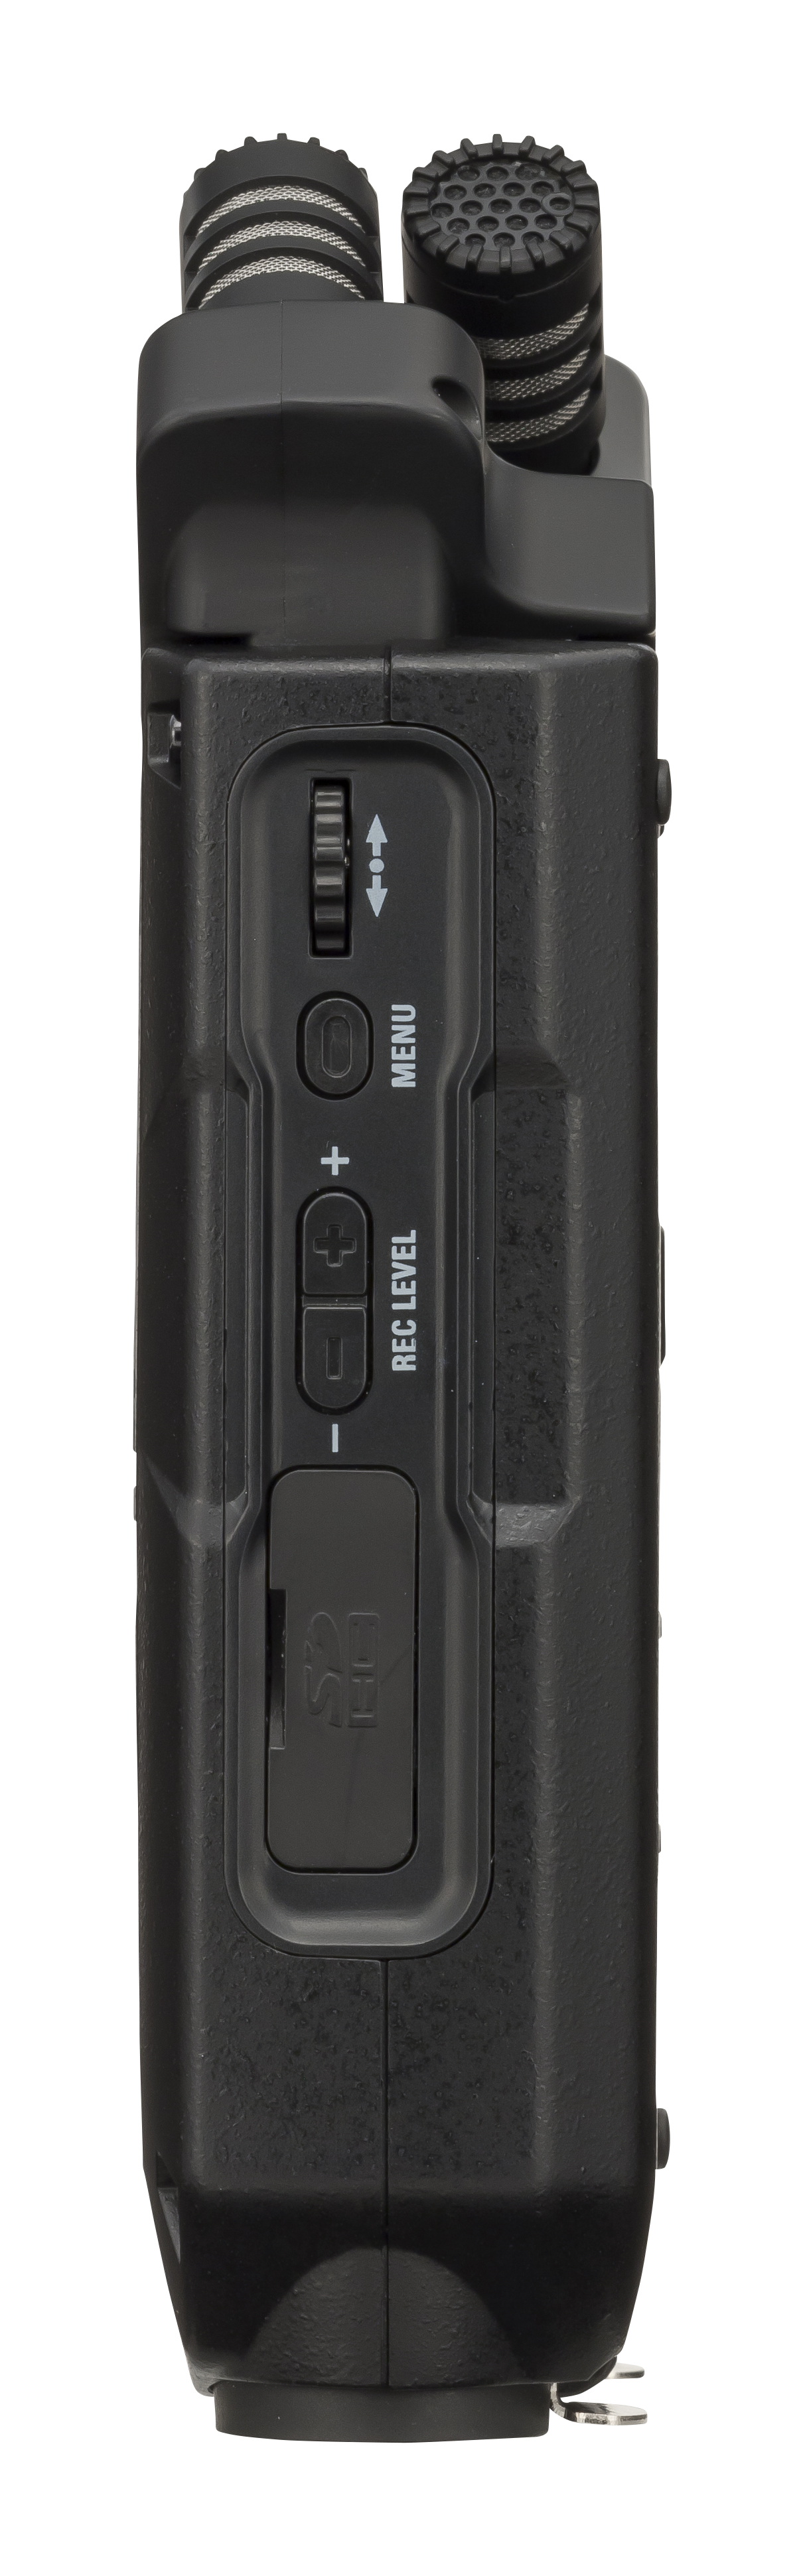 Zoom H4n Pro Black - Portable recorder - Variation 2